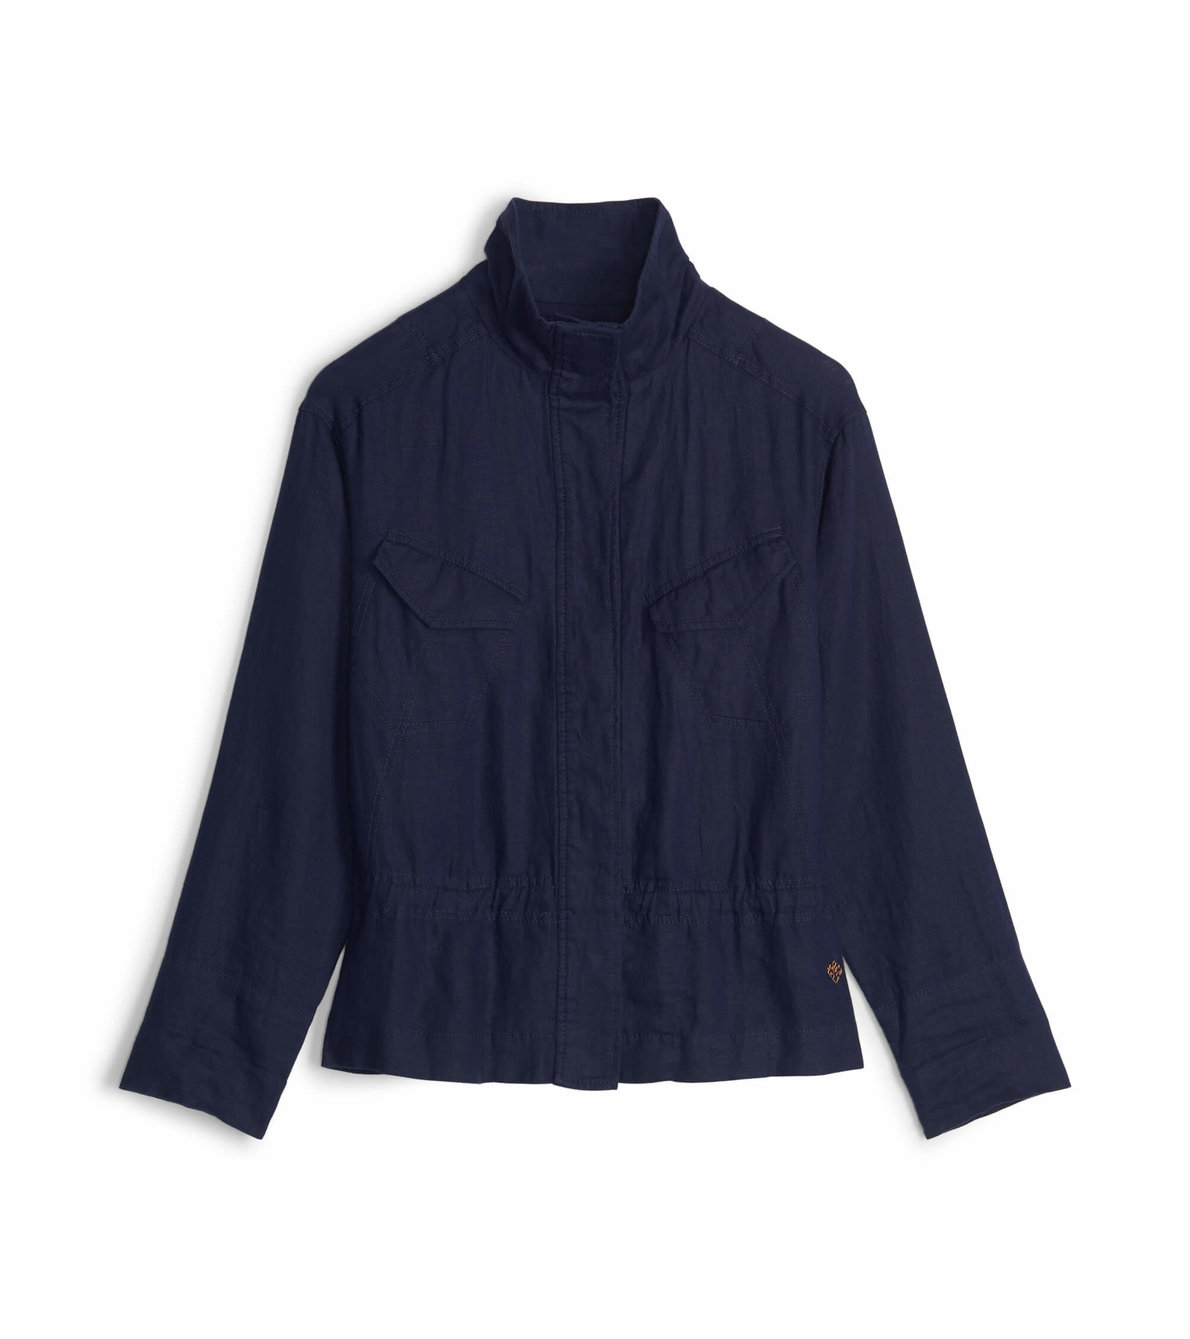 View larger image of Camden Linen Jacket - Patriot Blue